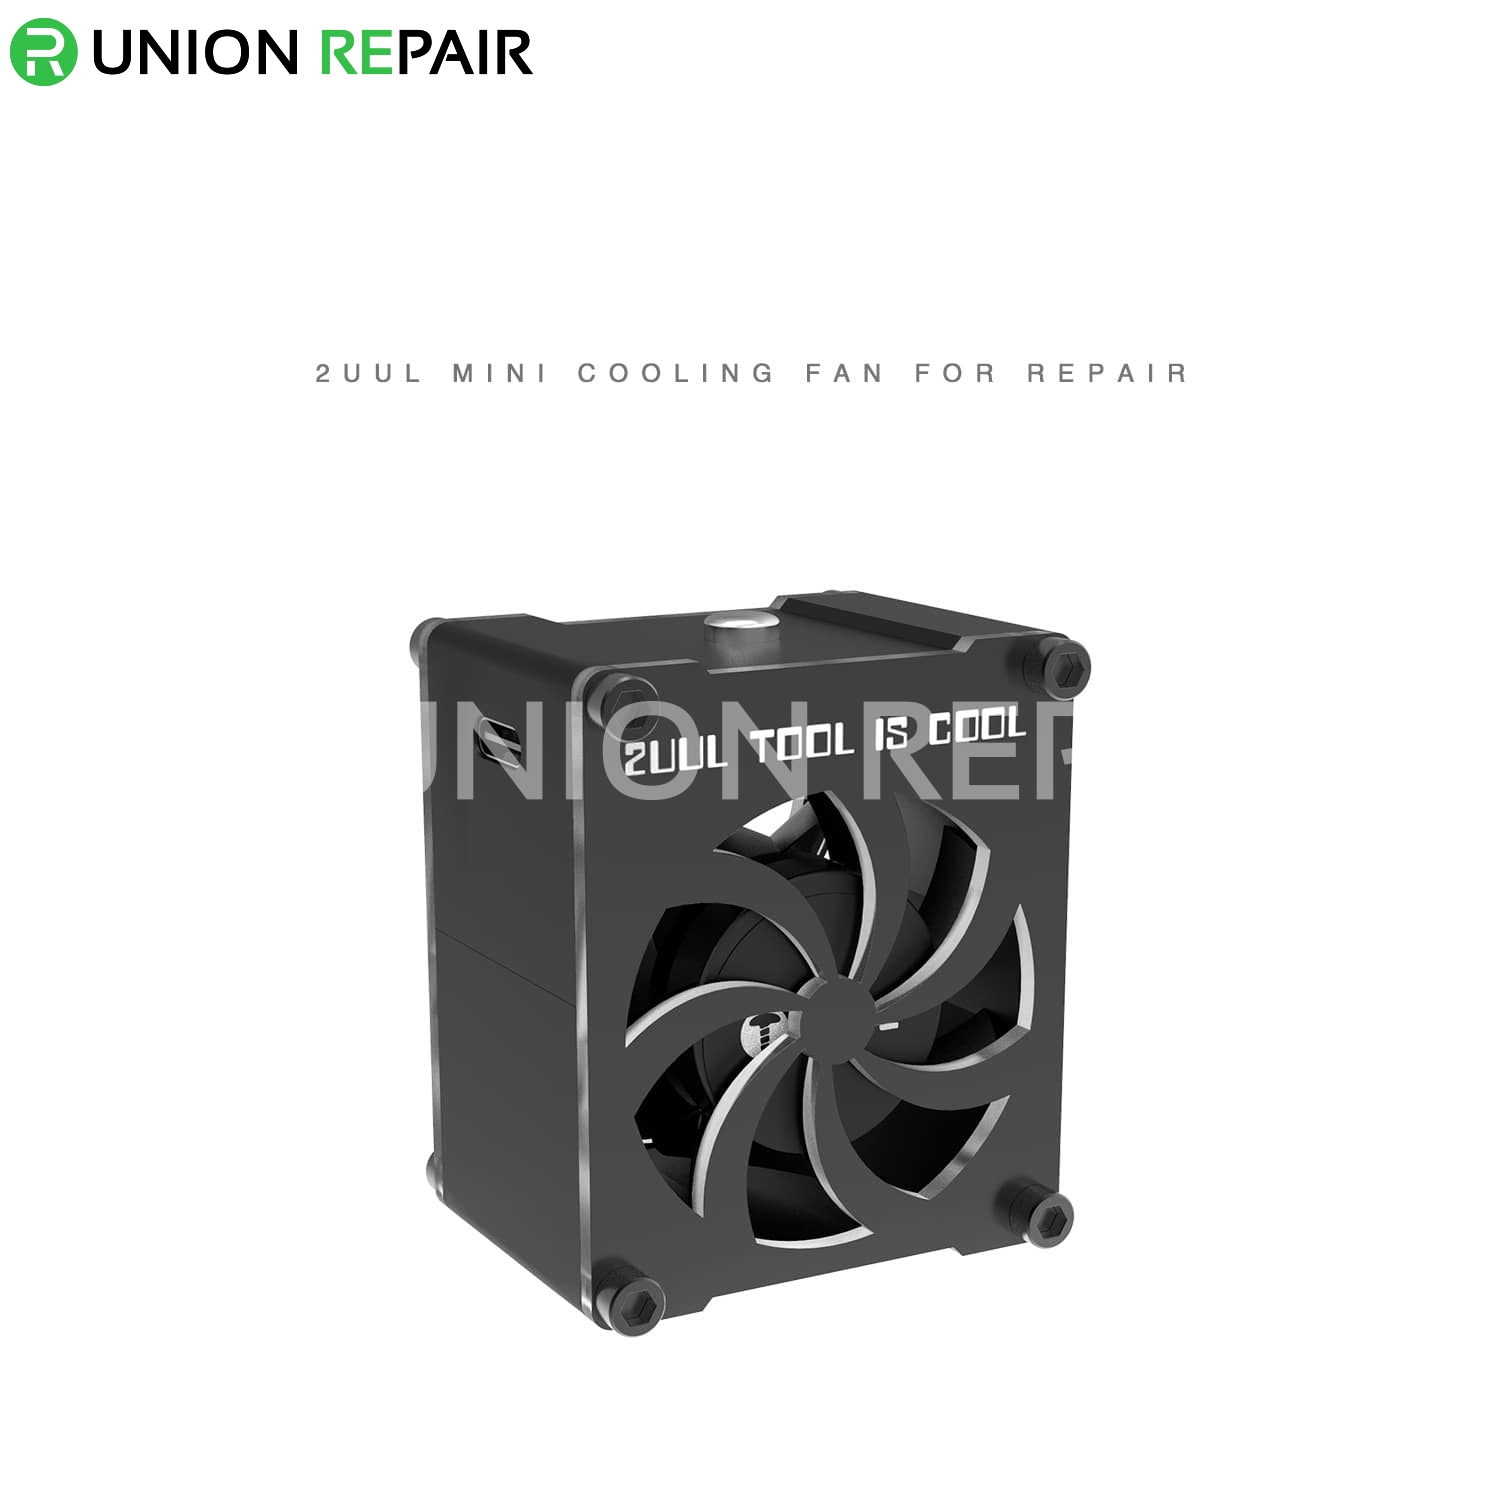 2UUL CUUL Mini Cooling Fan for Repair